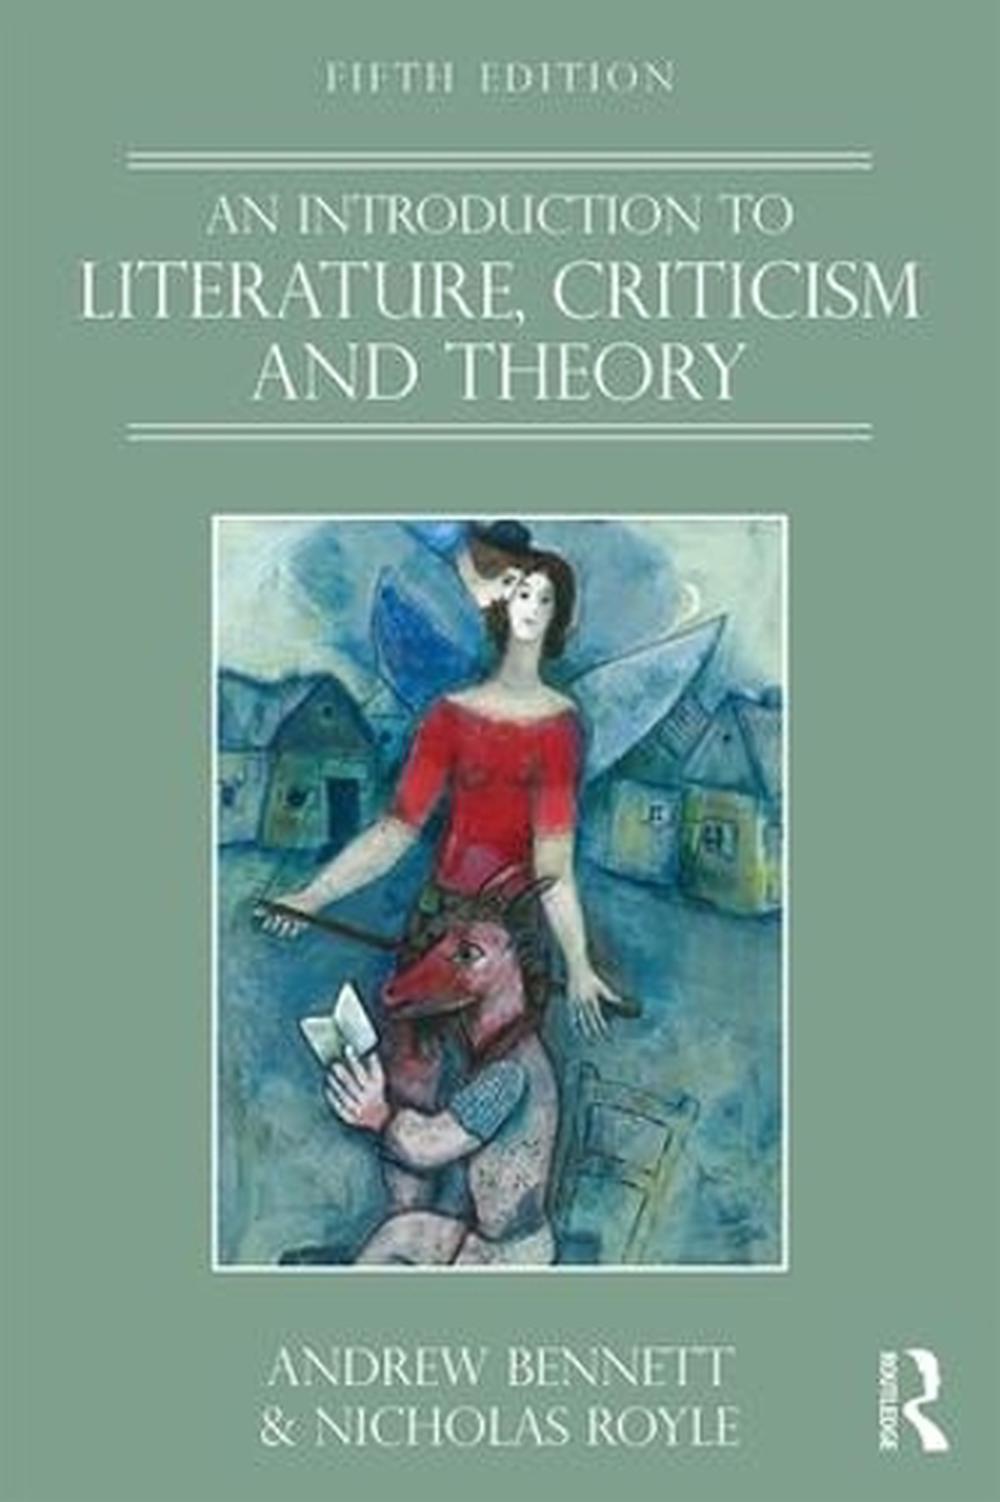 literary criticism books pdf